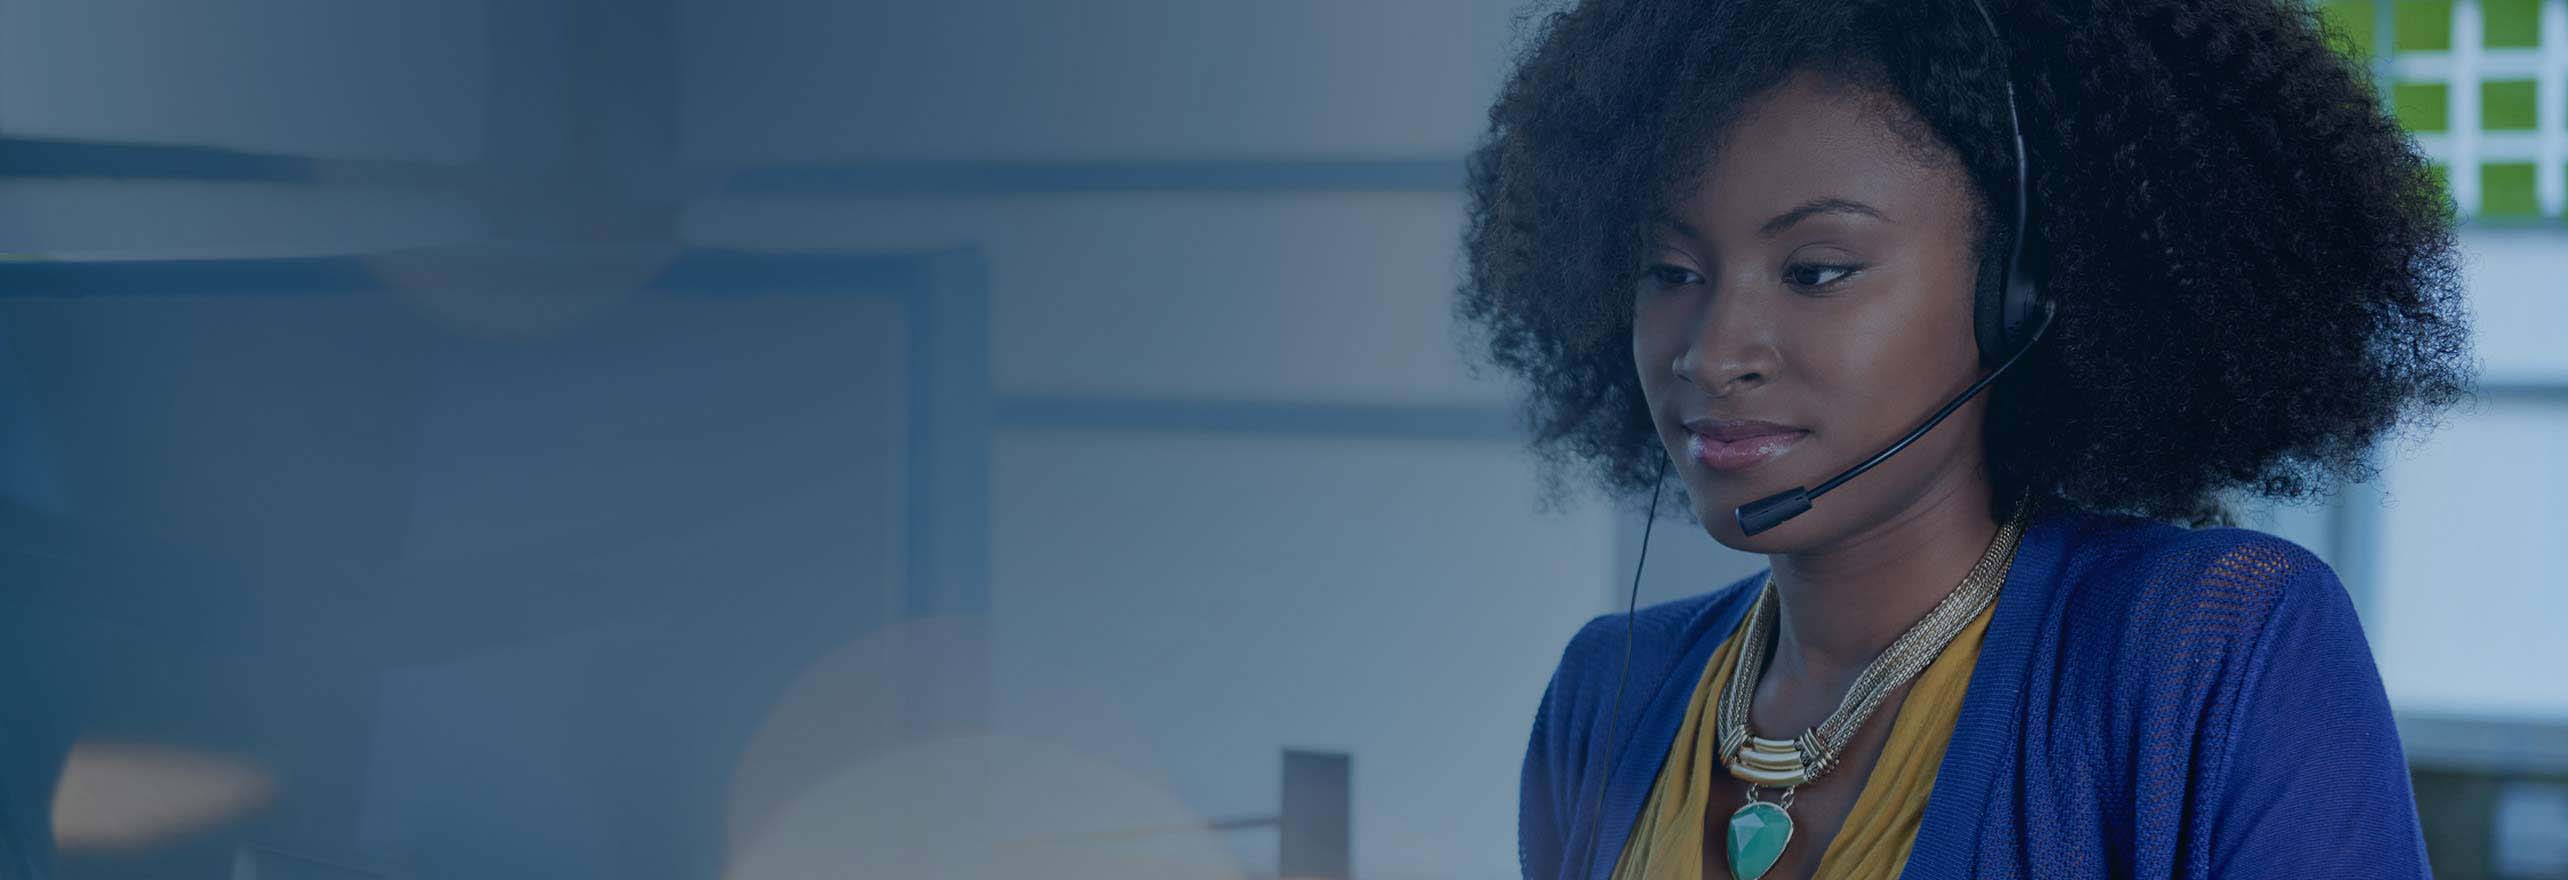 African American woman working using a inbound call center platform wearing a headset